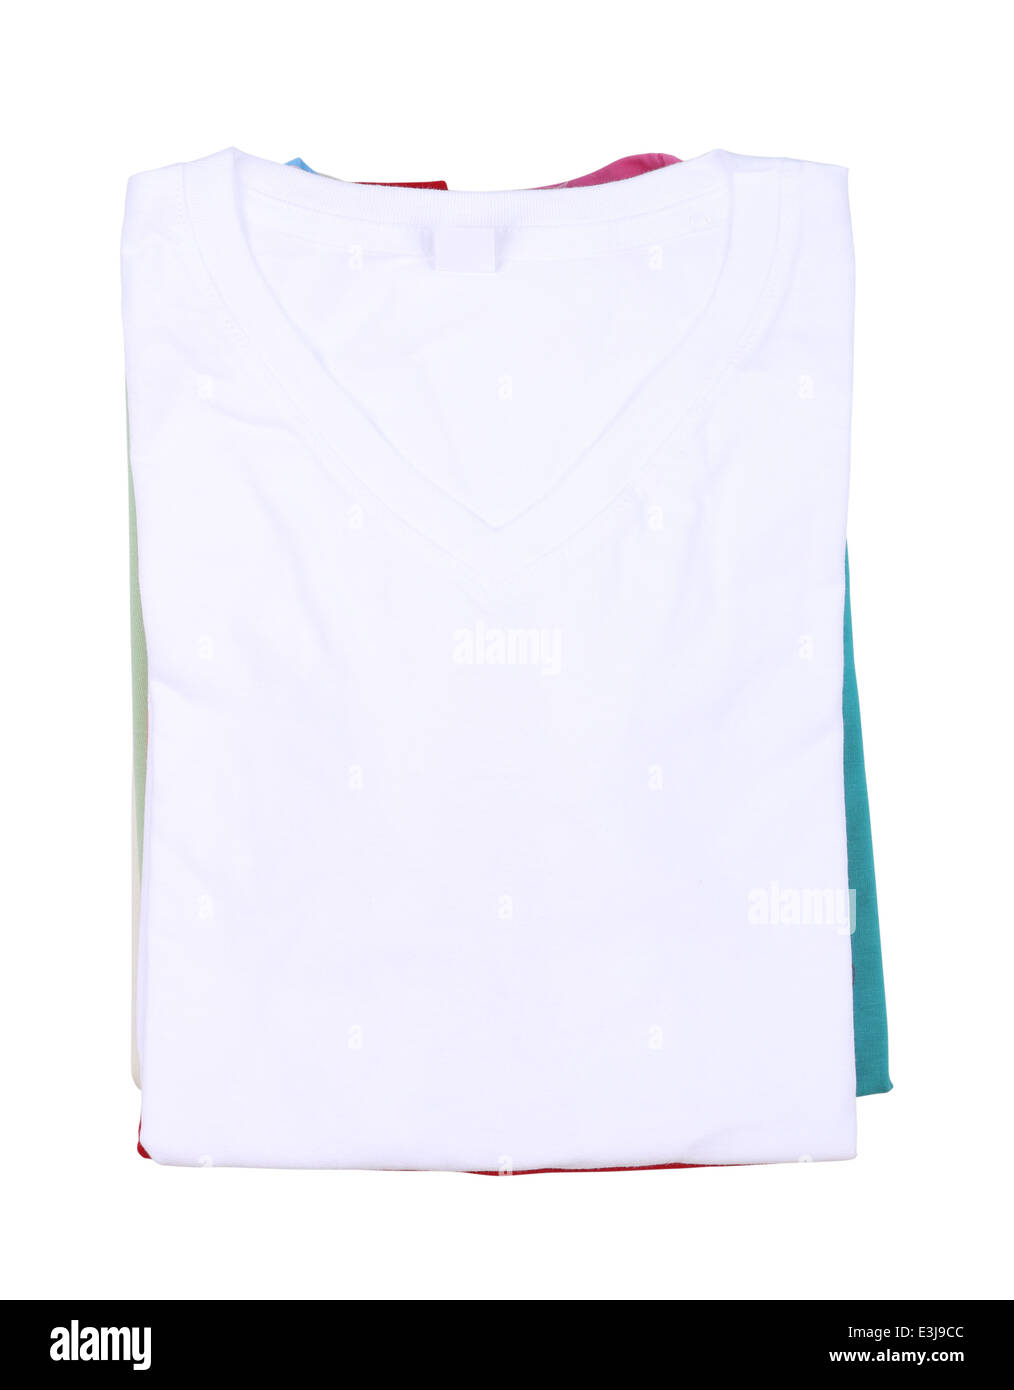 Plain Round Neck Unisex T Shirt Cotton Men T-shirts Blank Tshirts Coton Tee  Shirts Wholesale Teeshirt Remera Poleras De Hombre